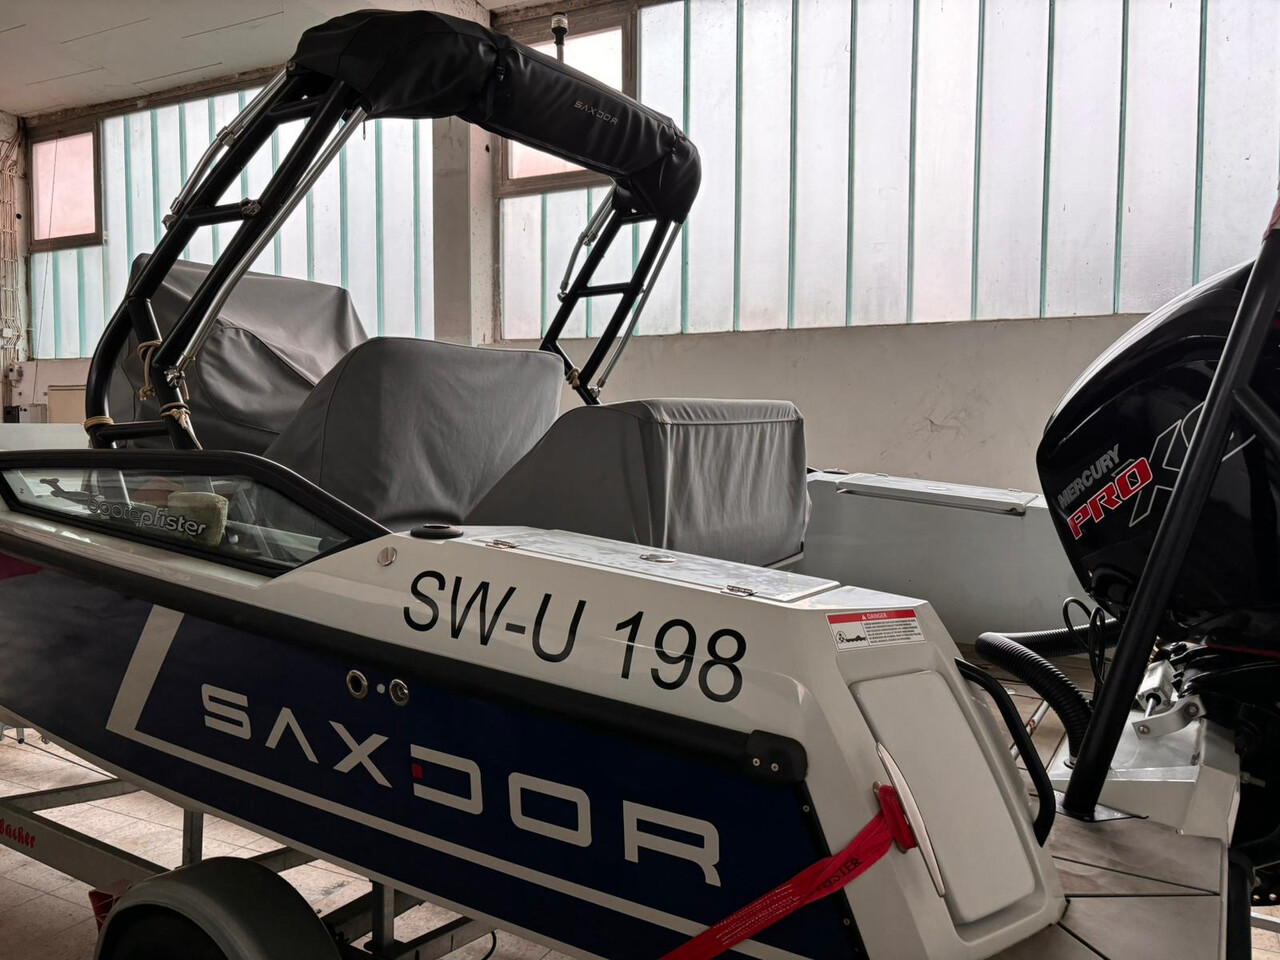 Saxdor 200 (Kommission) - picture 3